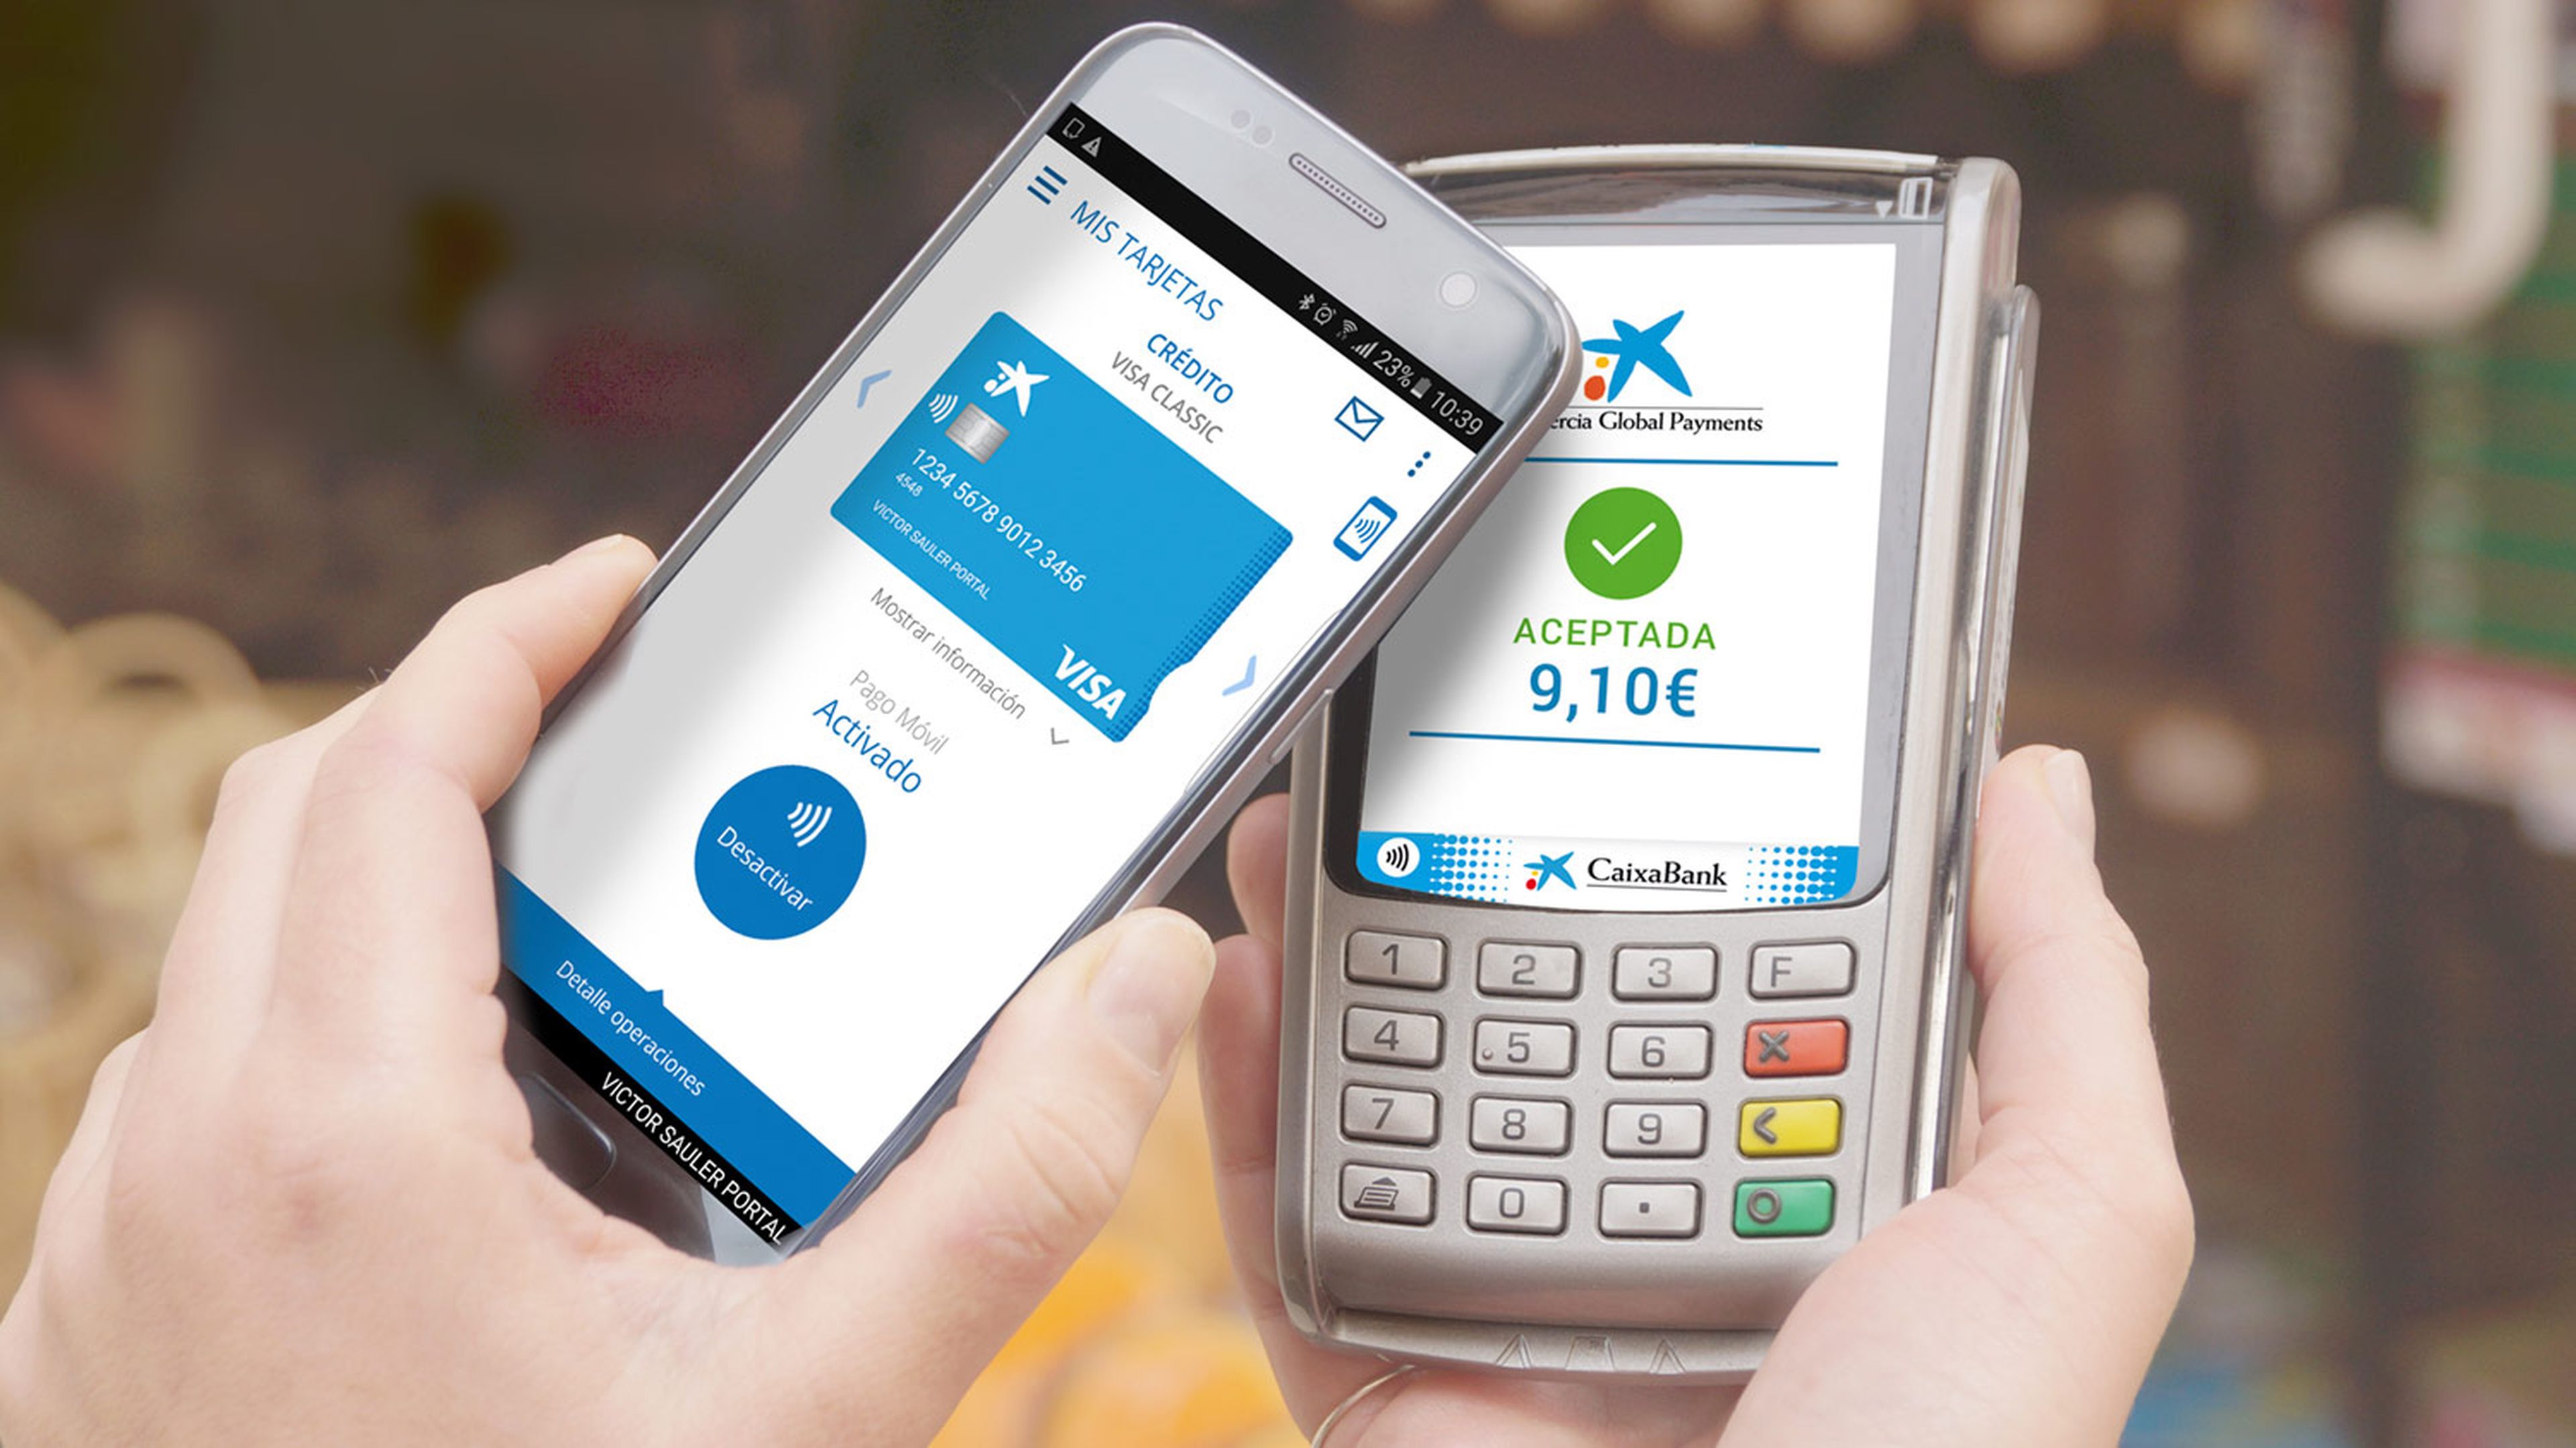 AZUL implementa aplicación que permite recibir pagos con tarjetas NFC desde  dispositivos móviles Ensegundos República Dominicana